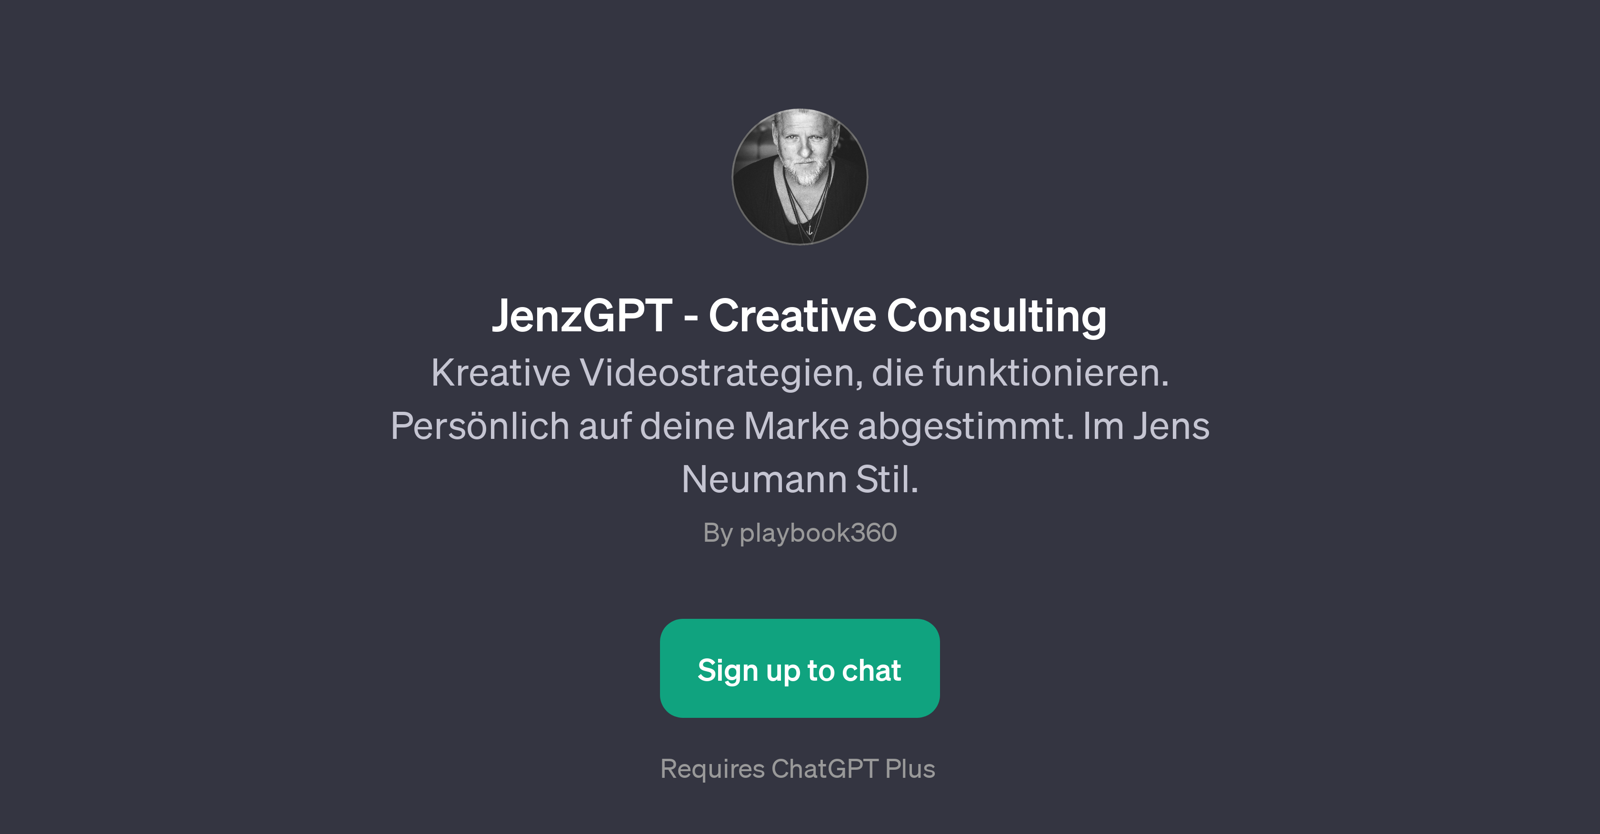 JenzGPT - Creative Consulting website